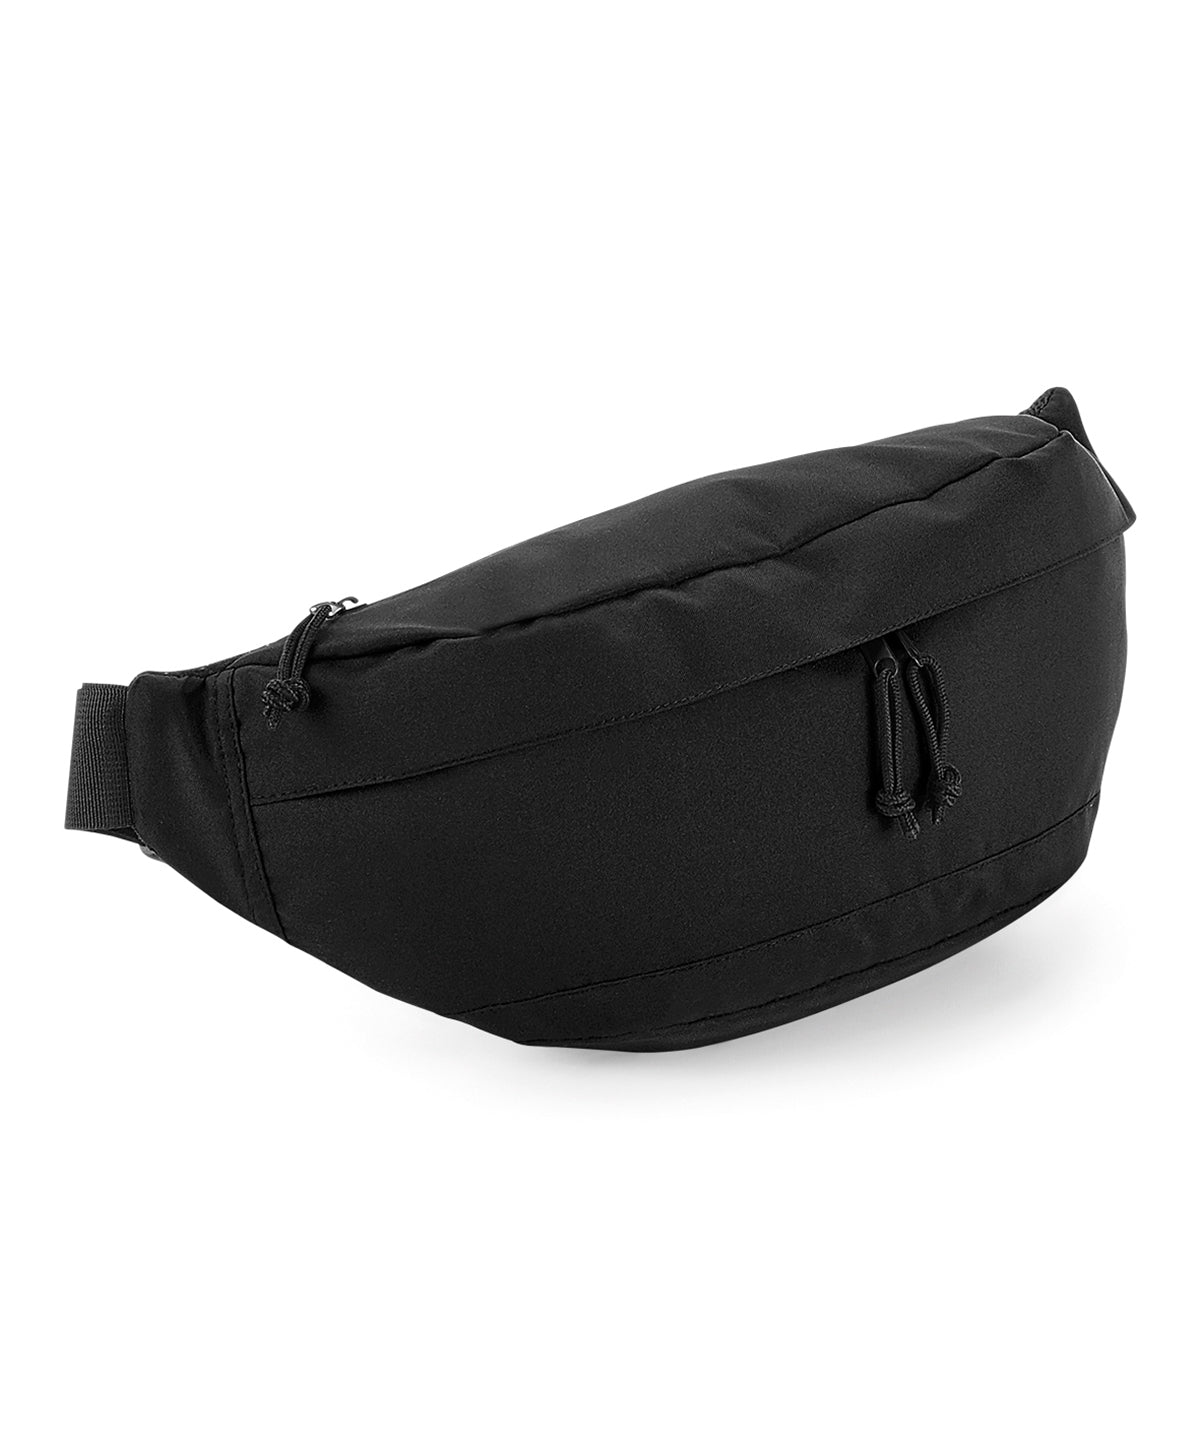 Personalised Bags - Black Bagbase Oversized cross body bag